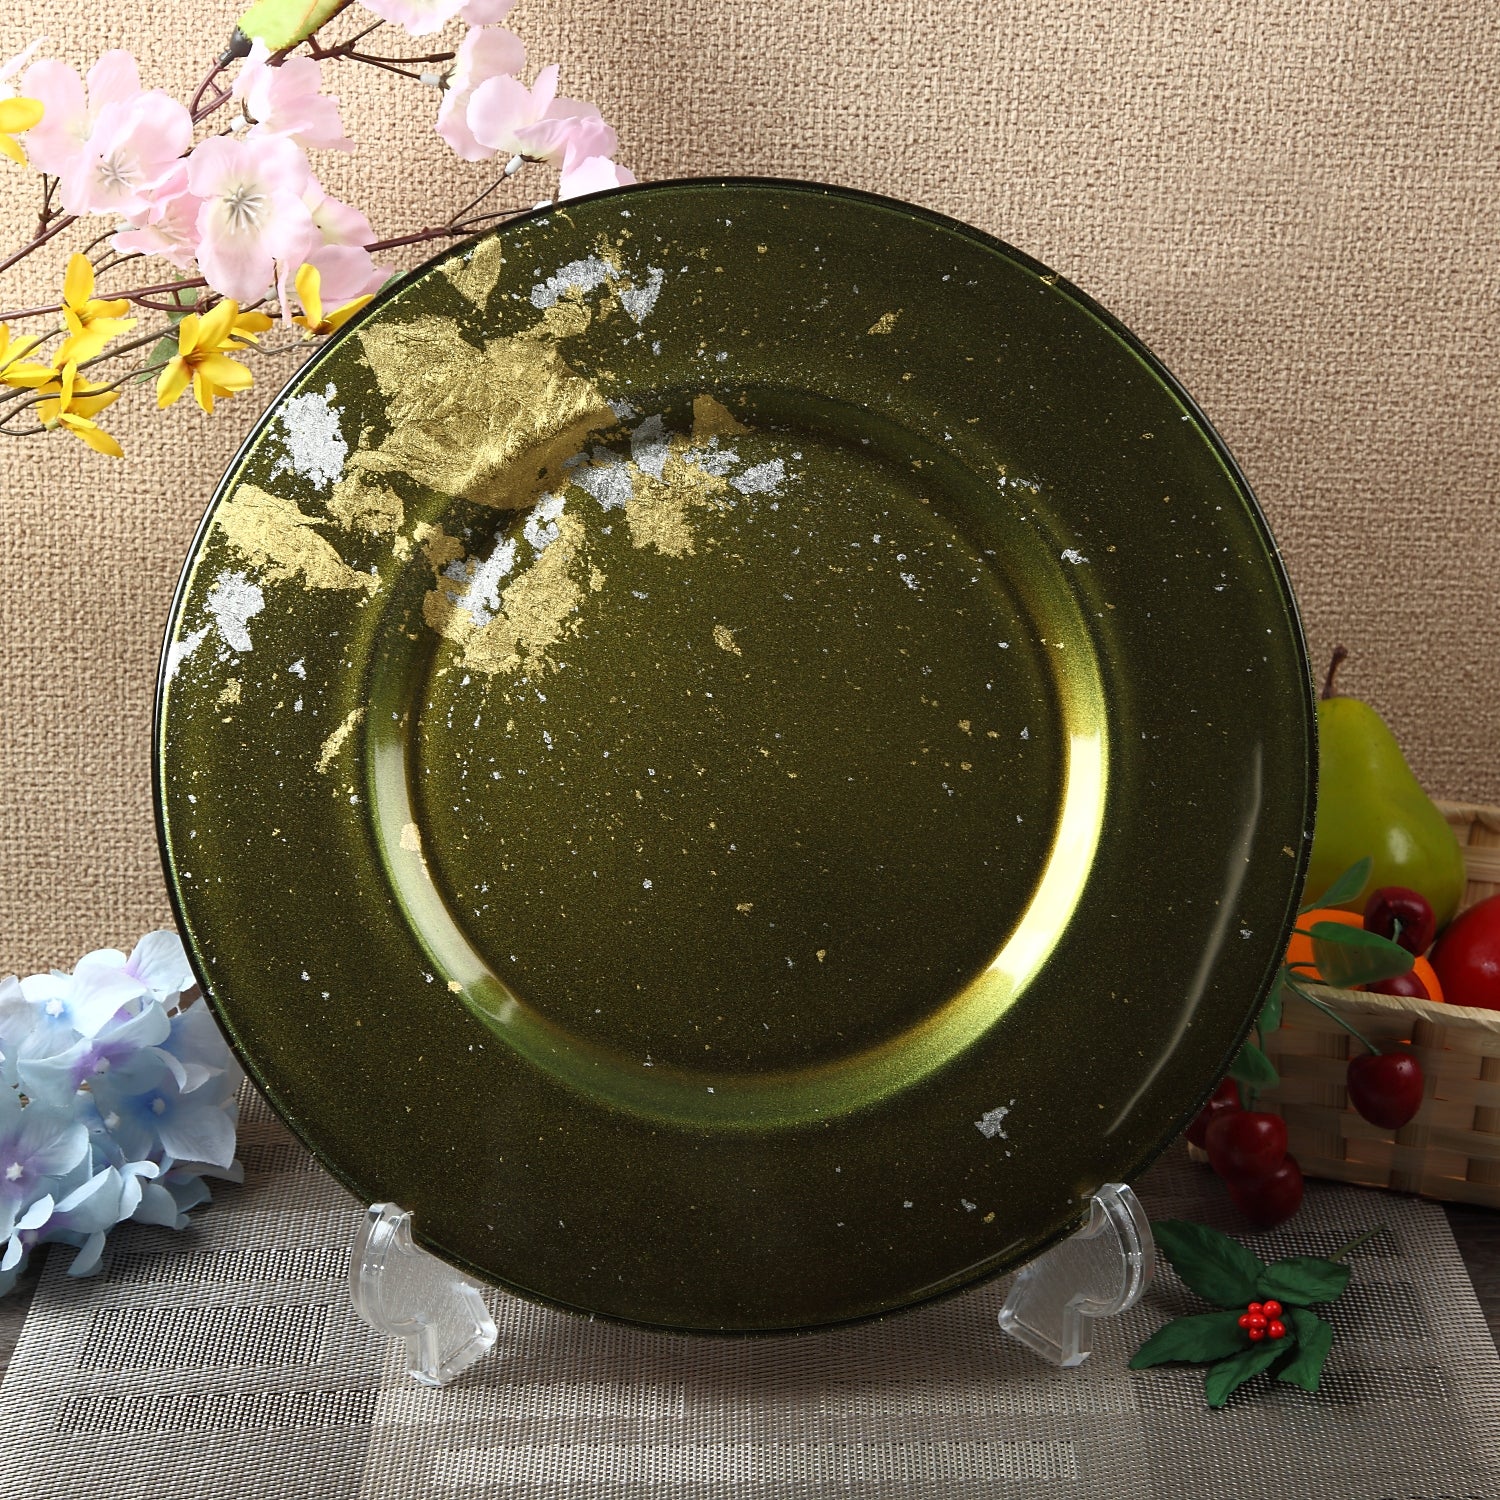 Syosaku Japanese Urushi Glass Charger Plate 13.9-inch (35cm) Majestic Green with Gold Leaf, Dishwasher Safe